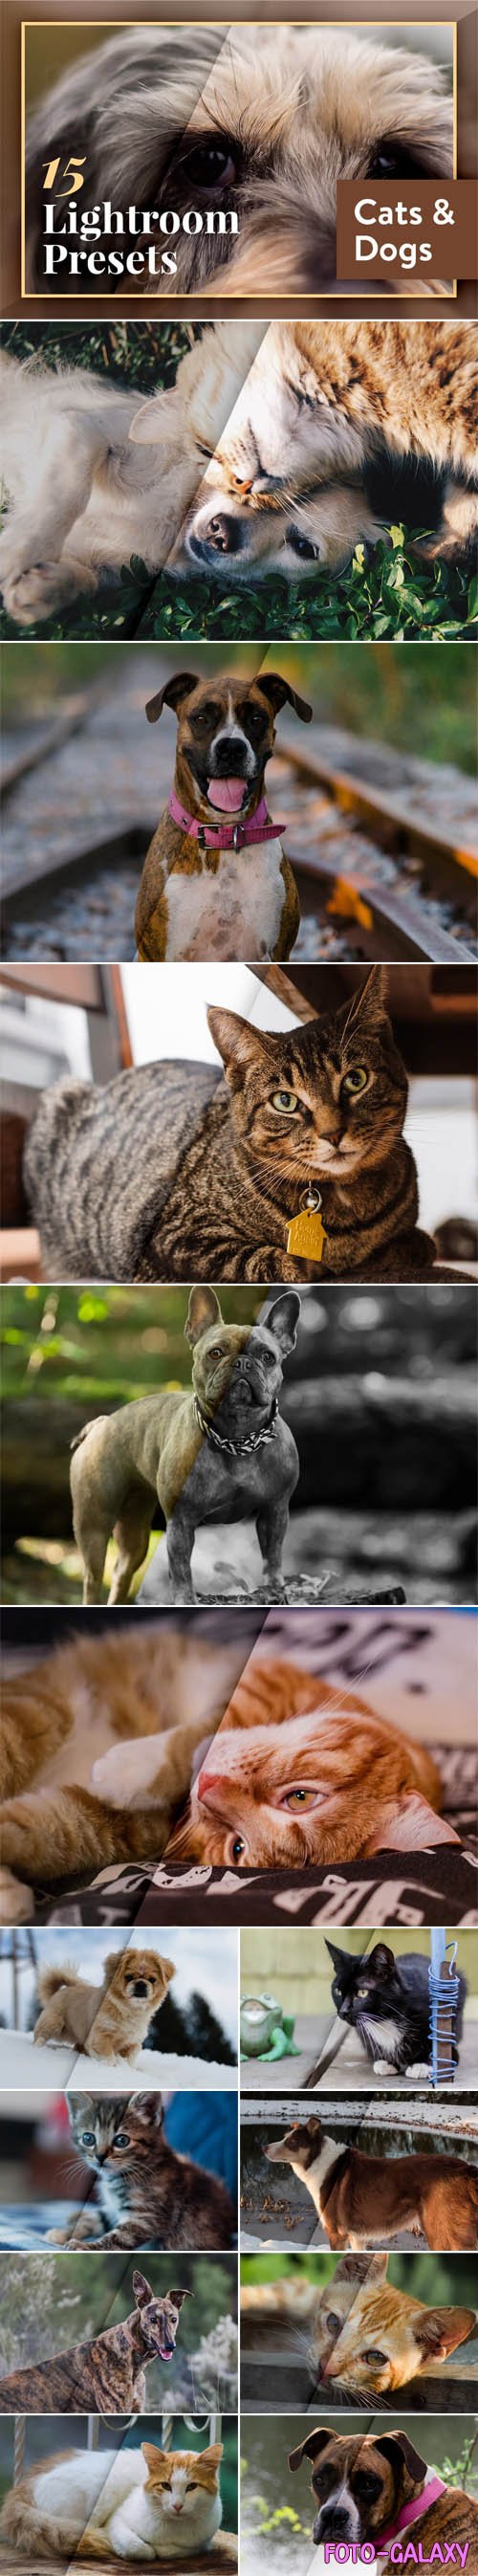 Cats and Dogs - Mobile & Desktop Lightroom Presets